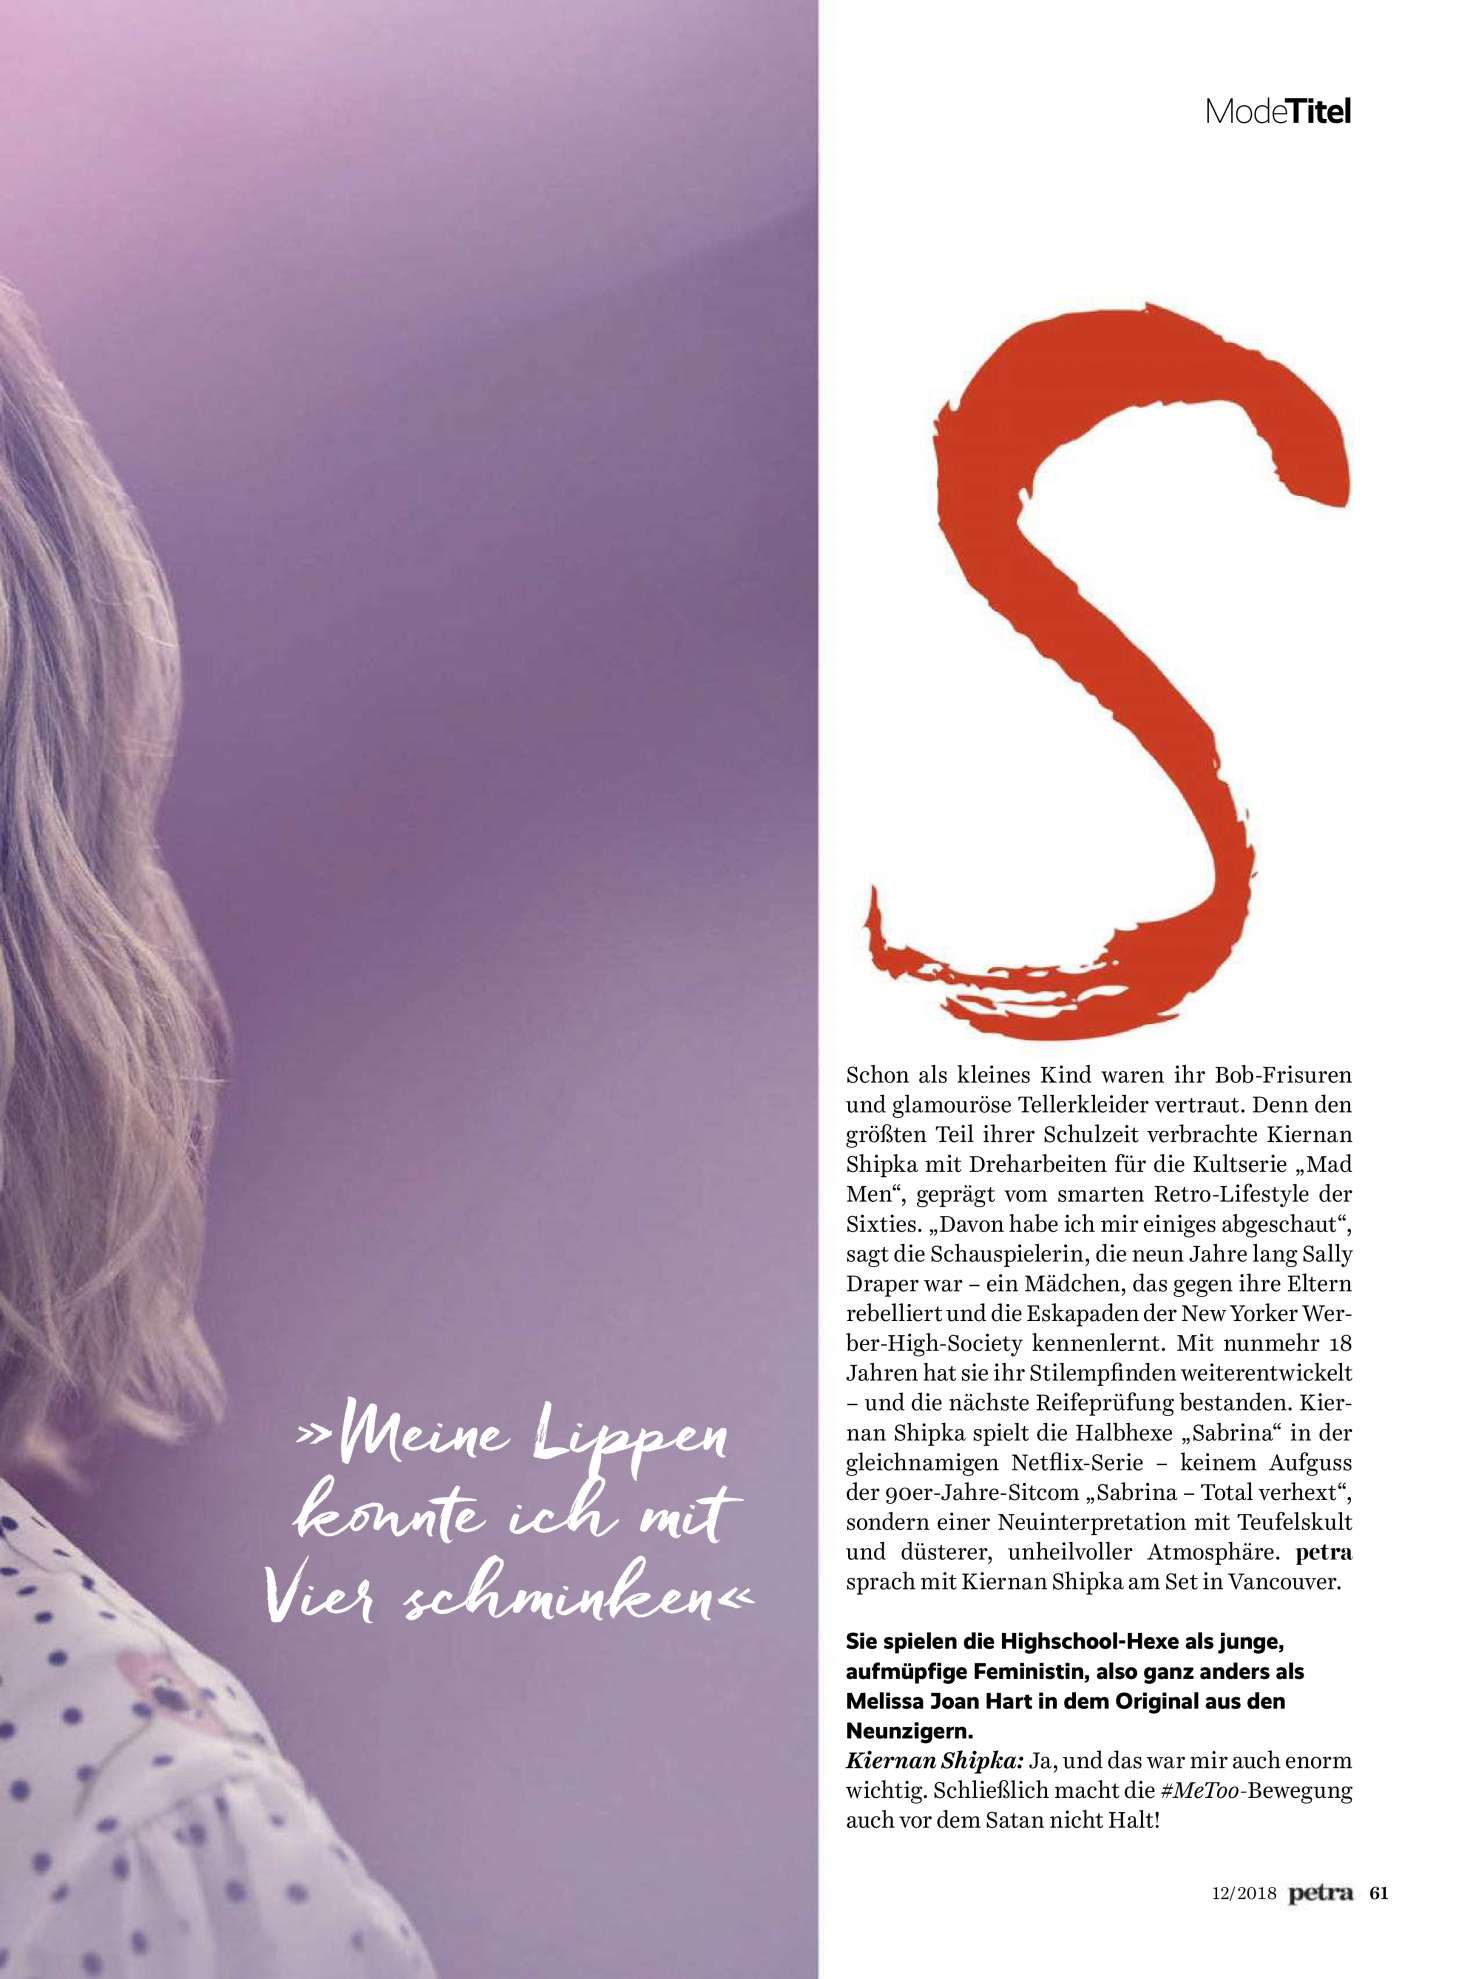 Kiernan Shipka â€“ Petra Magazine (December 2018)